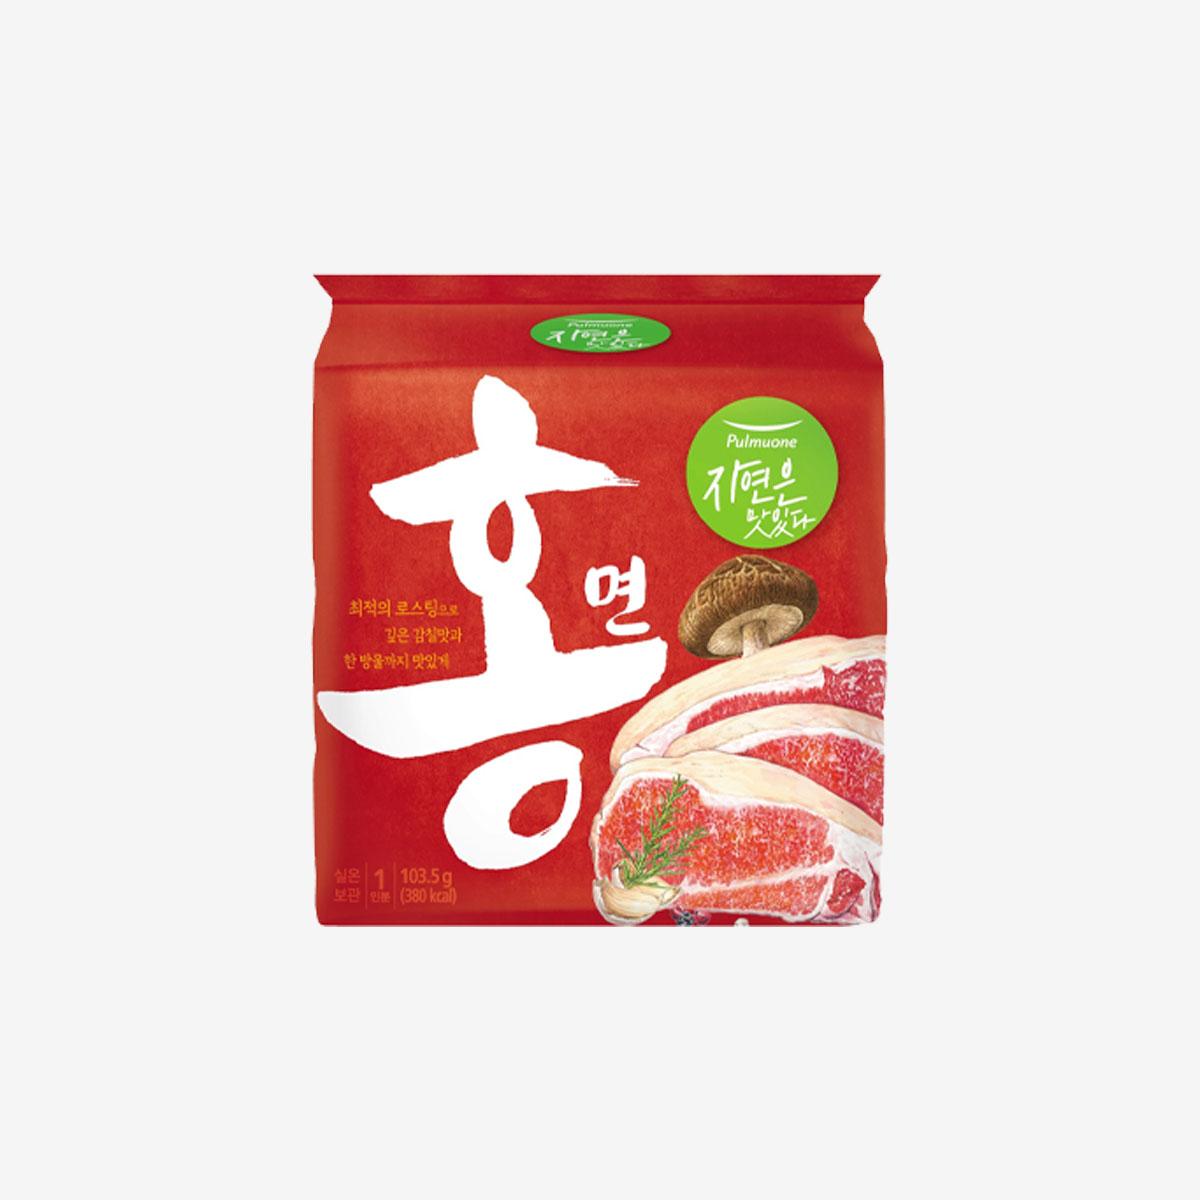 Hong Noodles (4 packs)